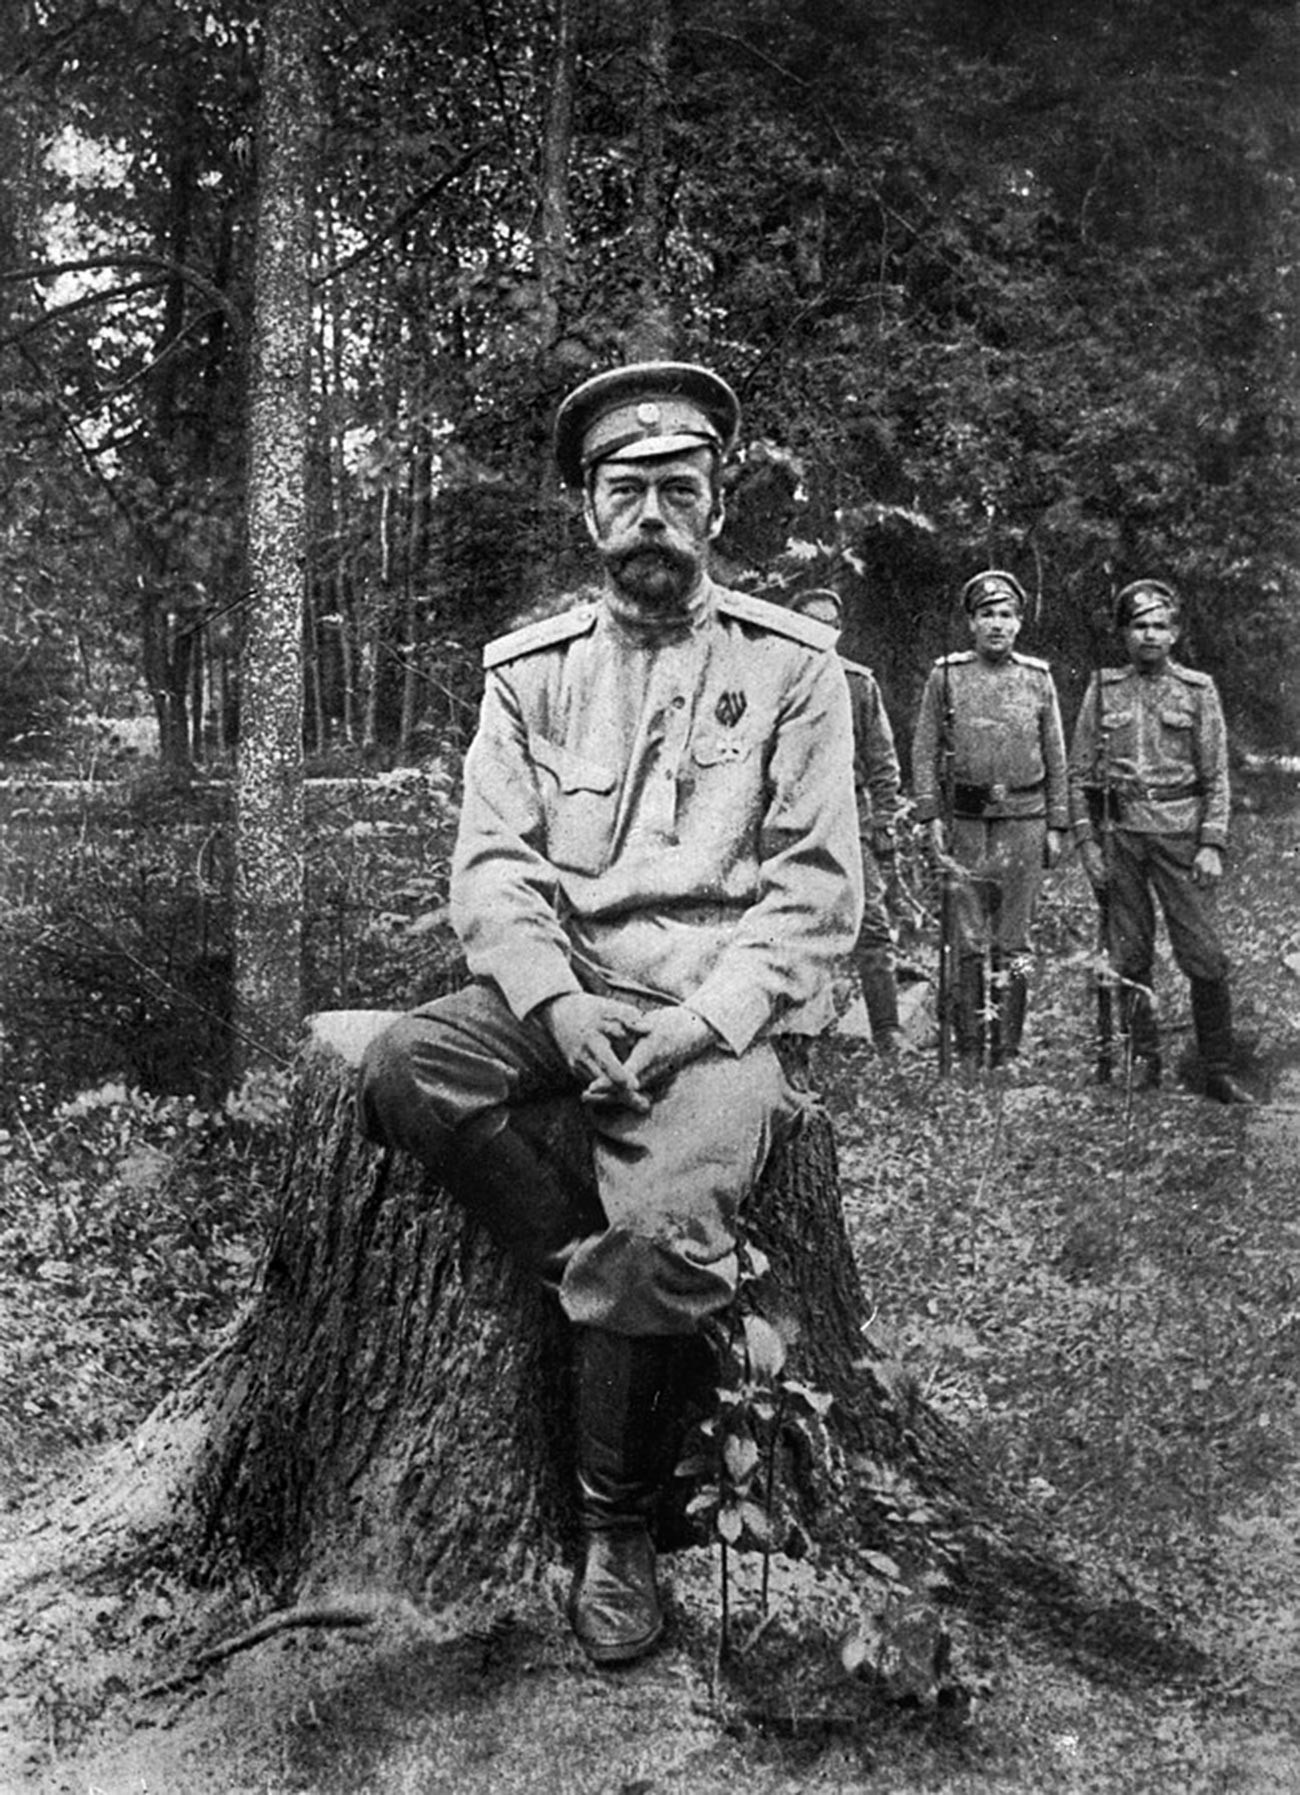 Nicholas Romanov after the abdication in Tsarskoe Selo, summer 1917